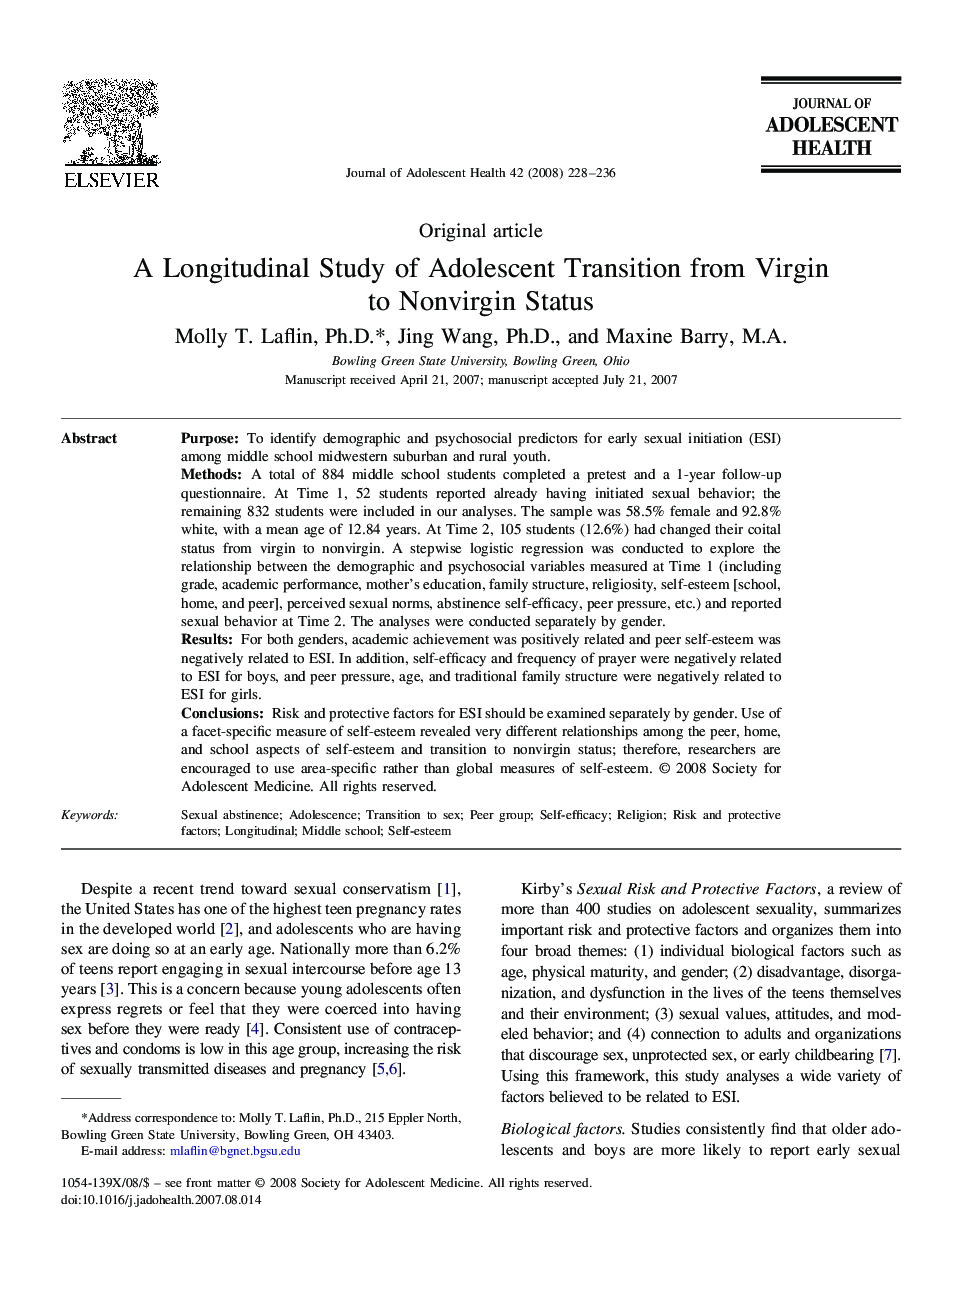 A Longitudinal Study of Adolescent Transition from Virgin to Nonvirgin Status